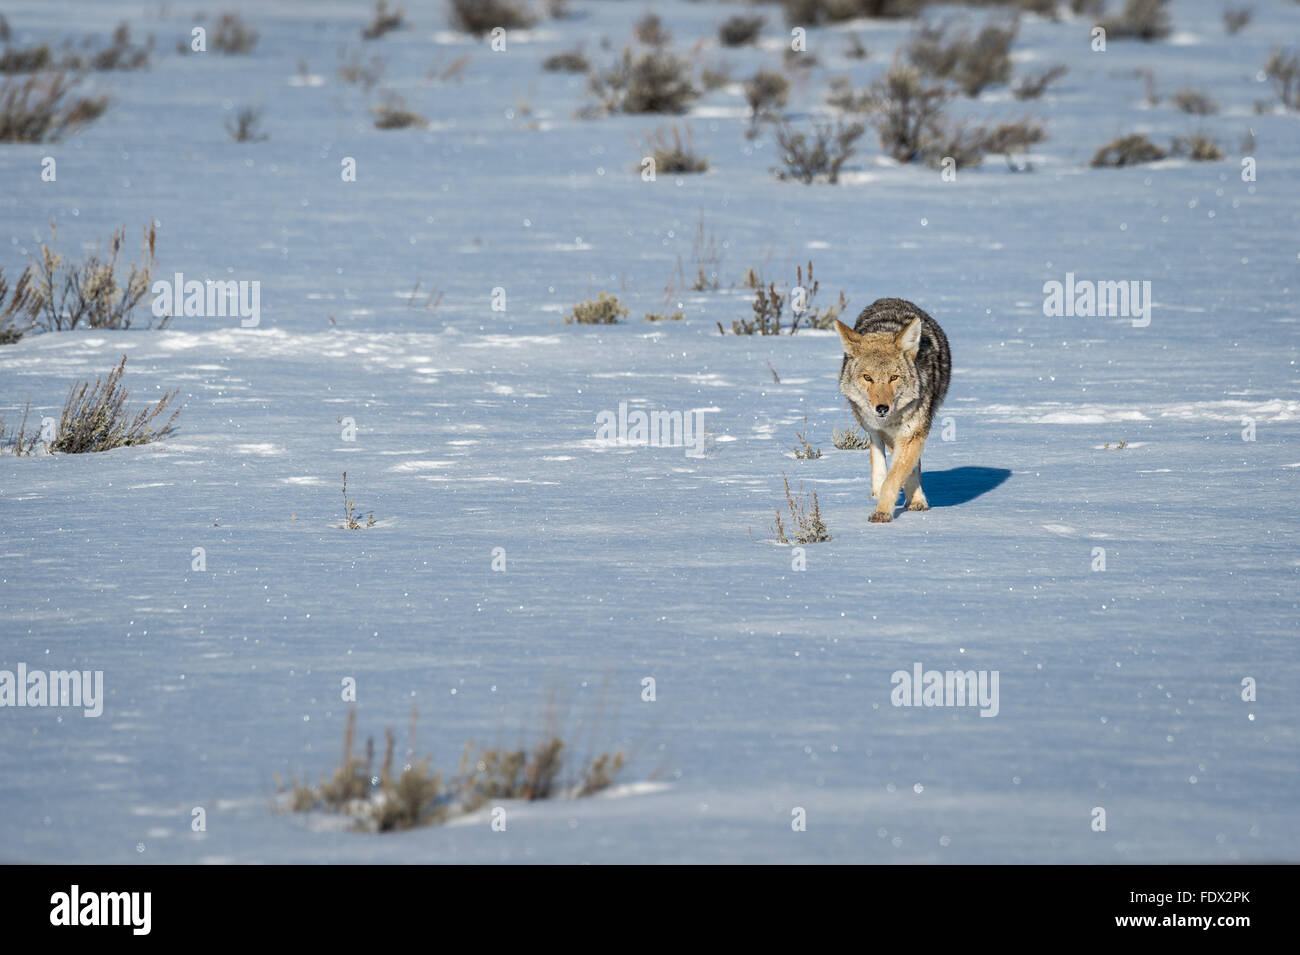 Coyote walking across the snow Stock Photo